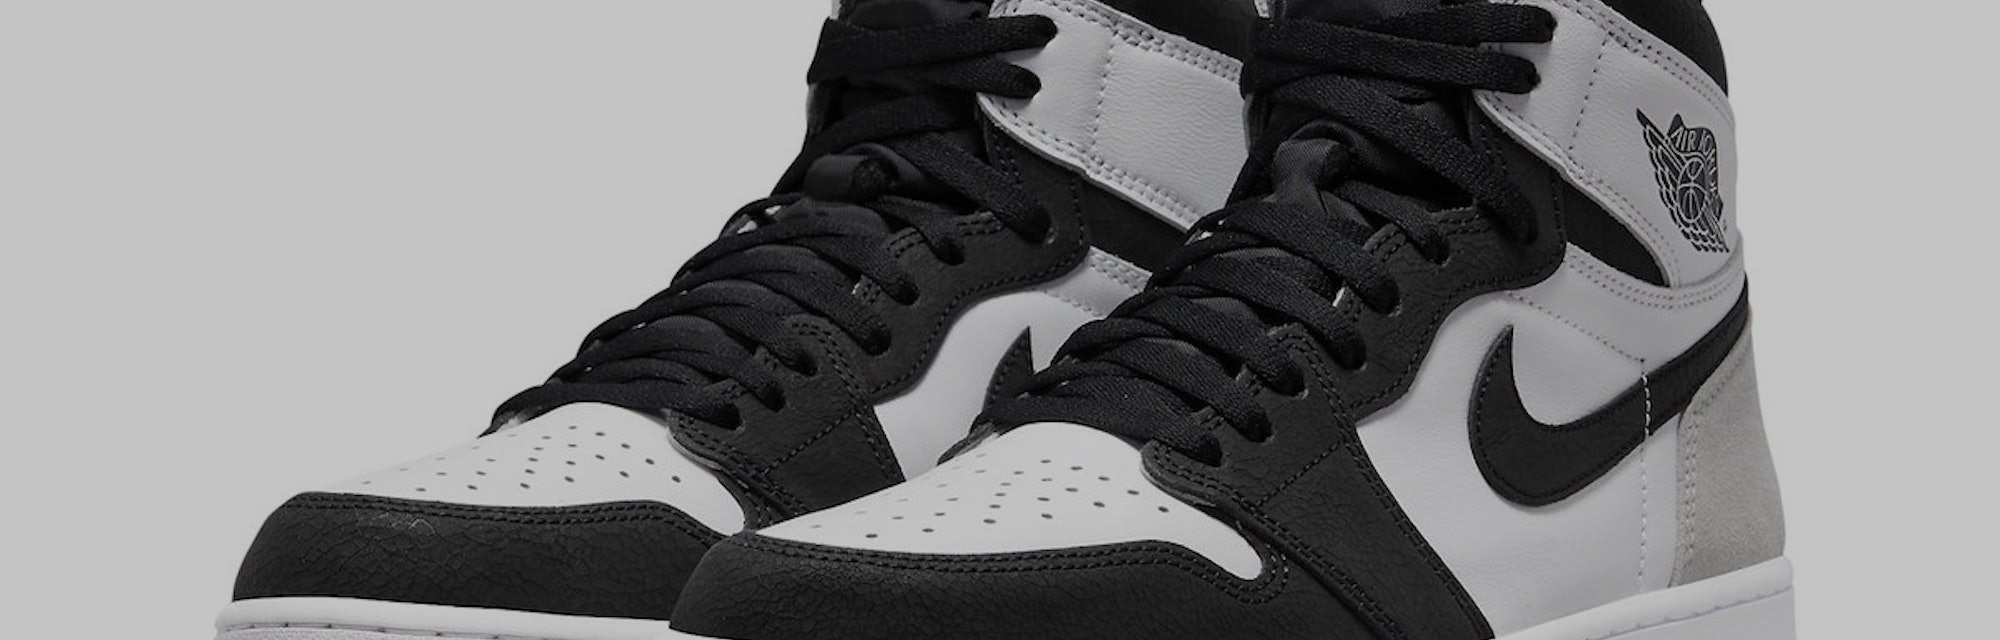 Nike Air Jordan 1 "Stage Haze" sneaker